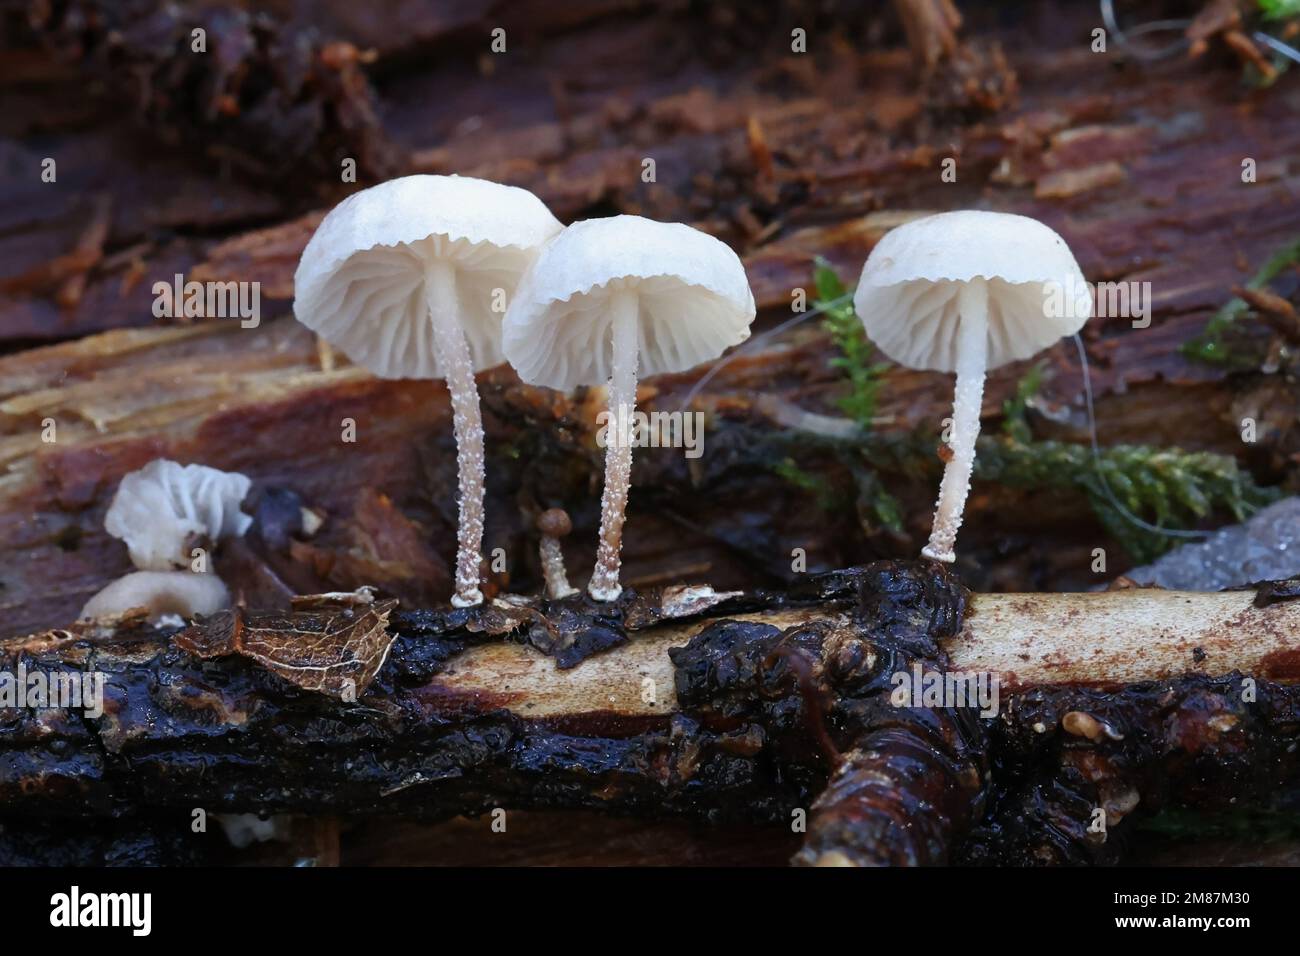 Marasmiellus ramealis, commonly known as Twig Parachute, wild mushroom from Finland Stock Photo